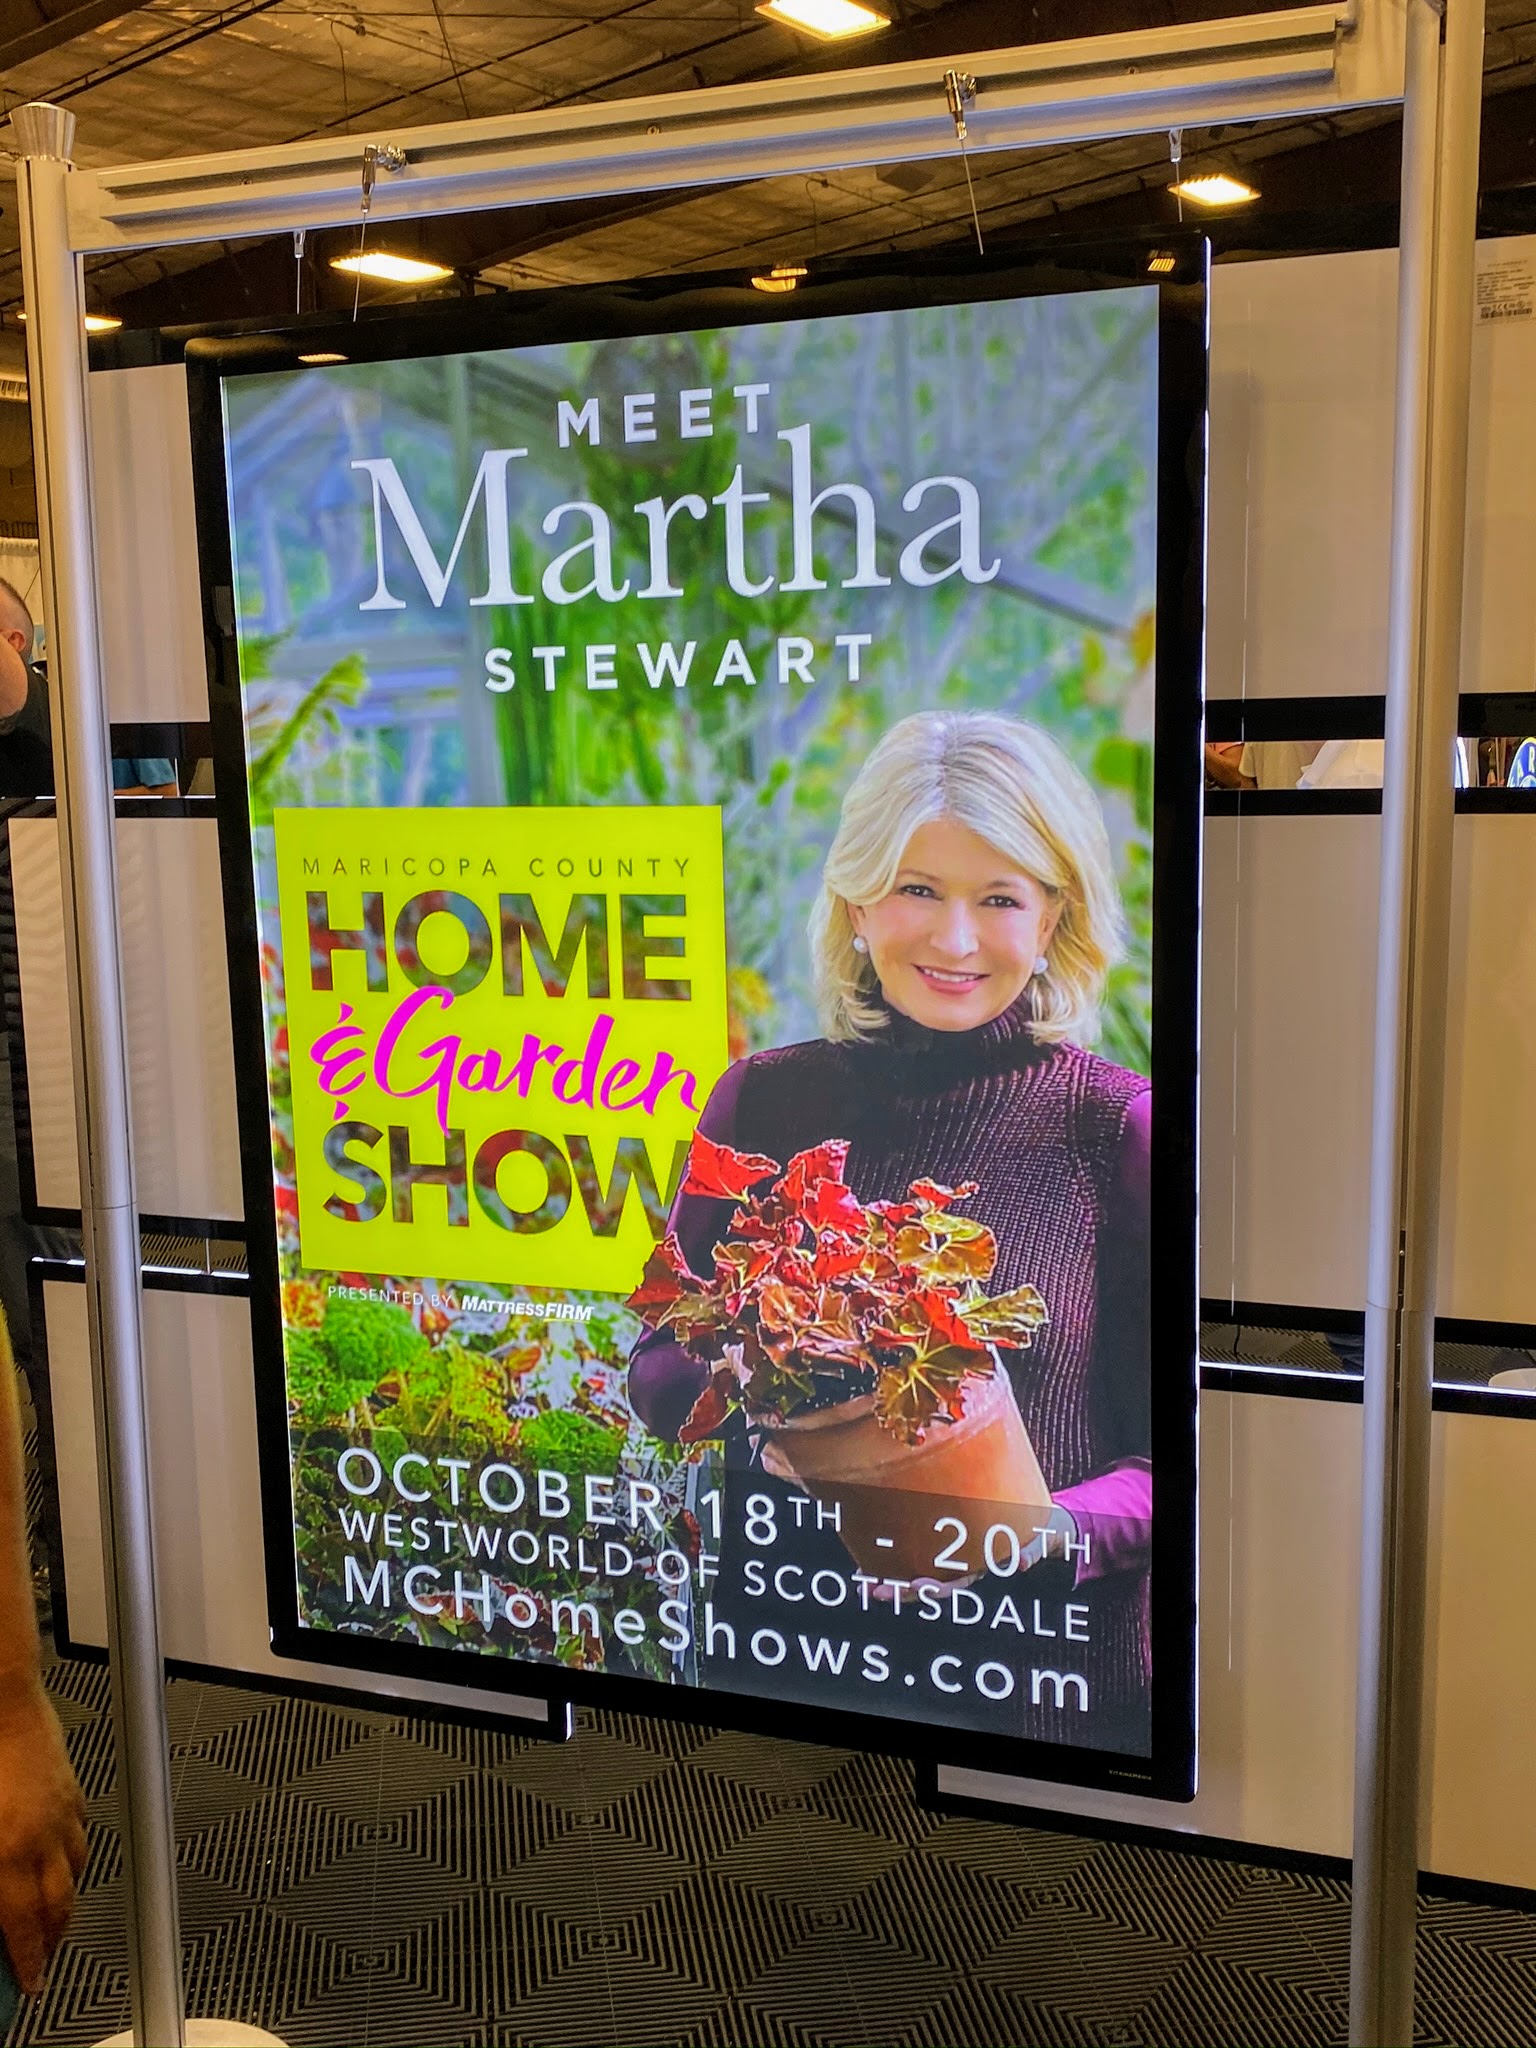 The Maricopa County Home & Garden Show in Arizona The Martha Stewart Blog